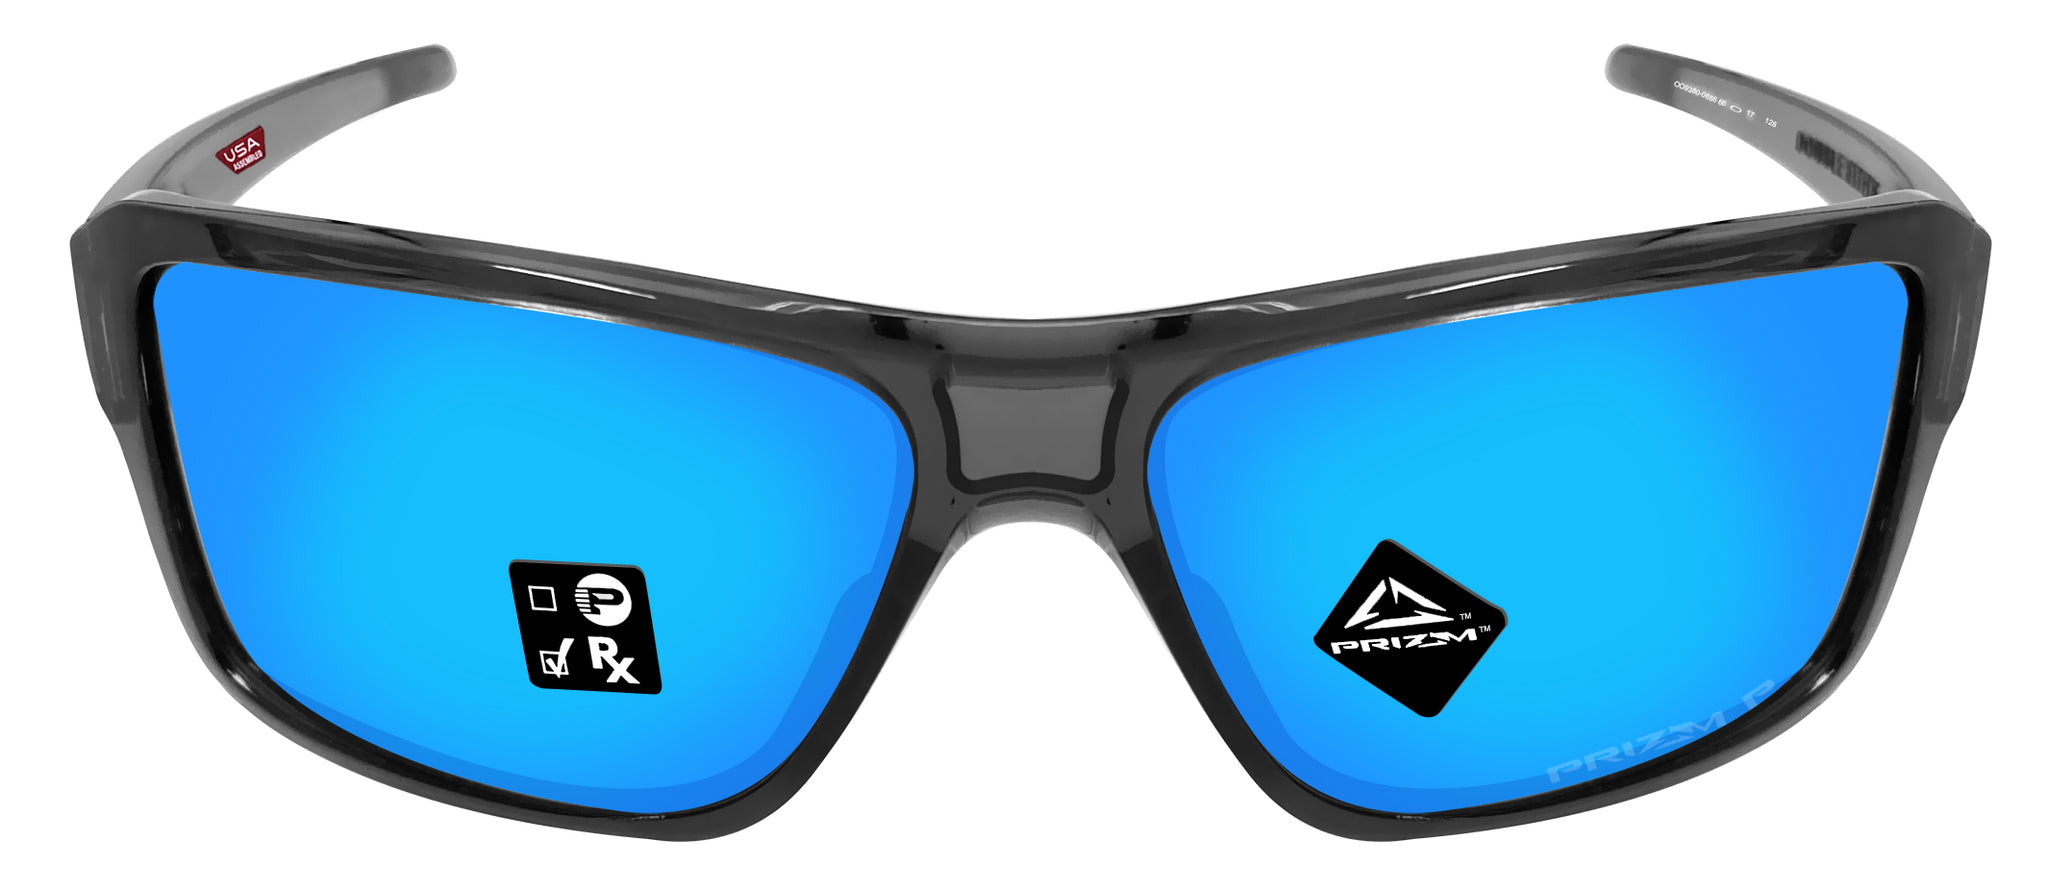 Double Edge Prizm Sapphire Polarized Lenses, Grey Smoke Frame Sunglasses